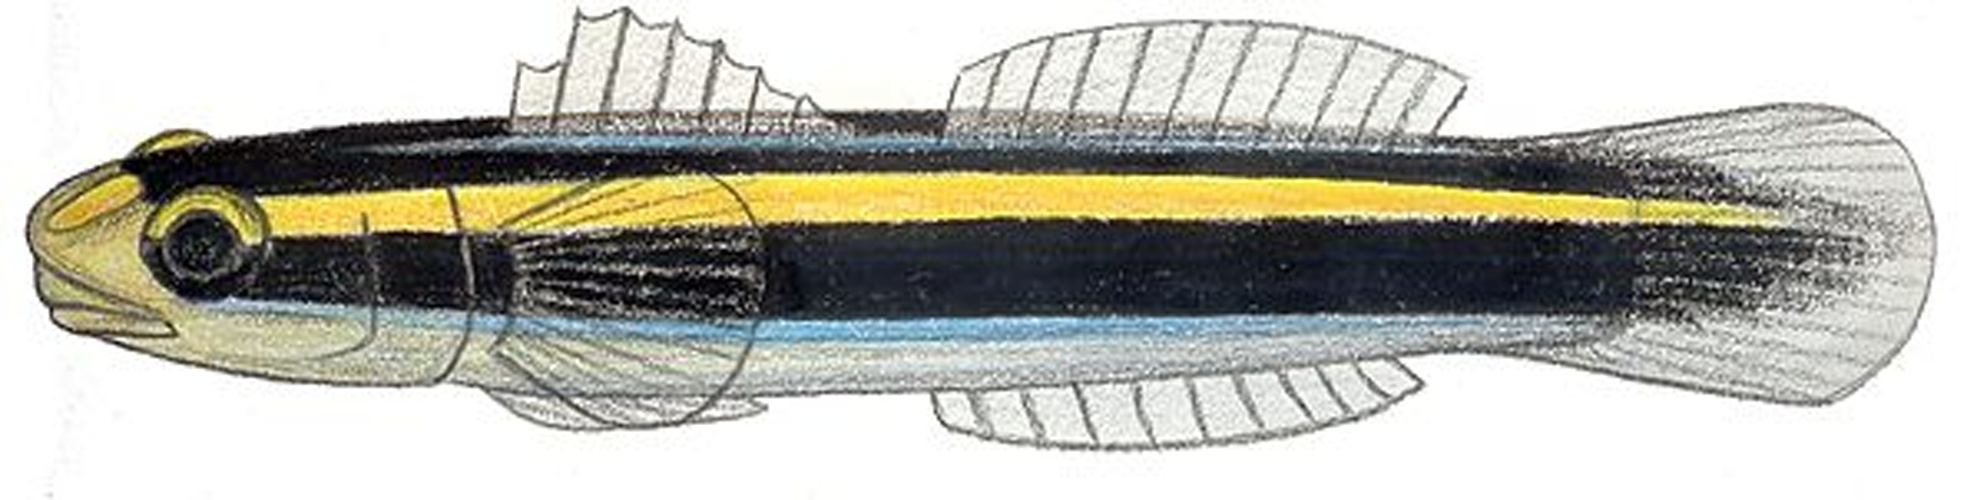 Elacatinus randalli © MyName (<a href="//commons.wikimedia.org/wiki/User:Tambja" title="User:Tambja">Tambja</a>)